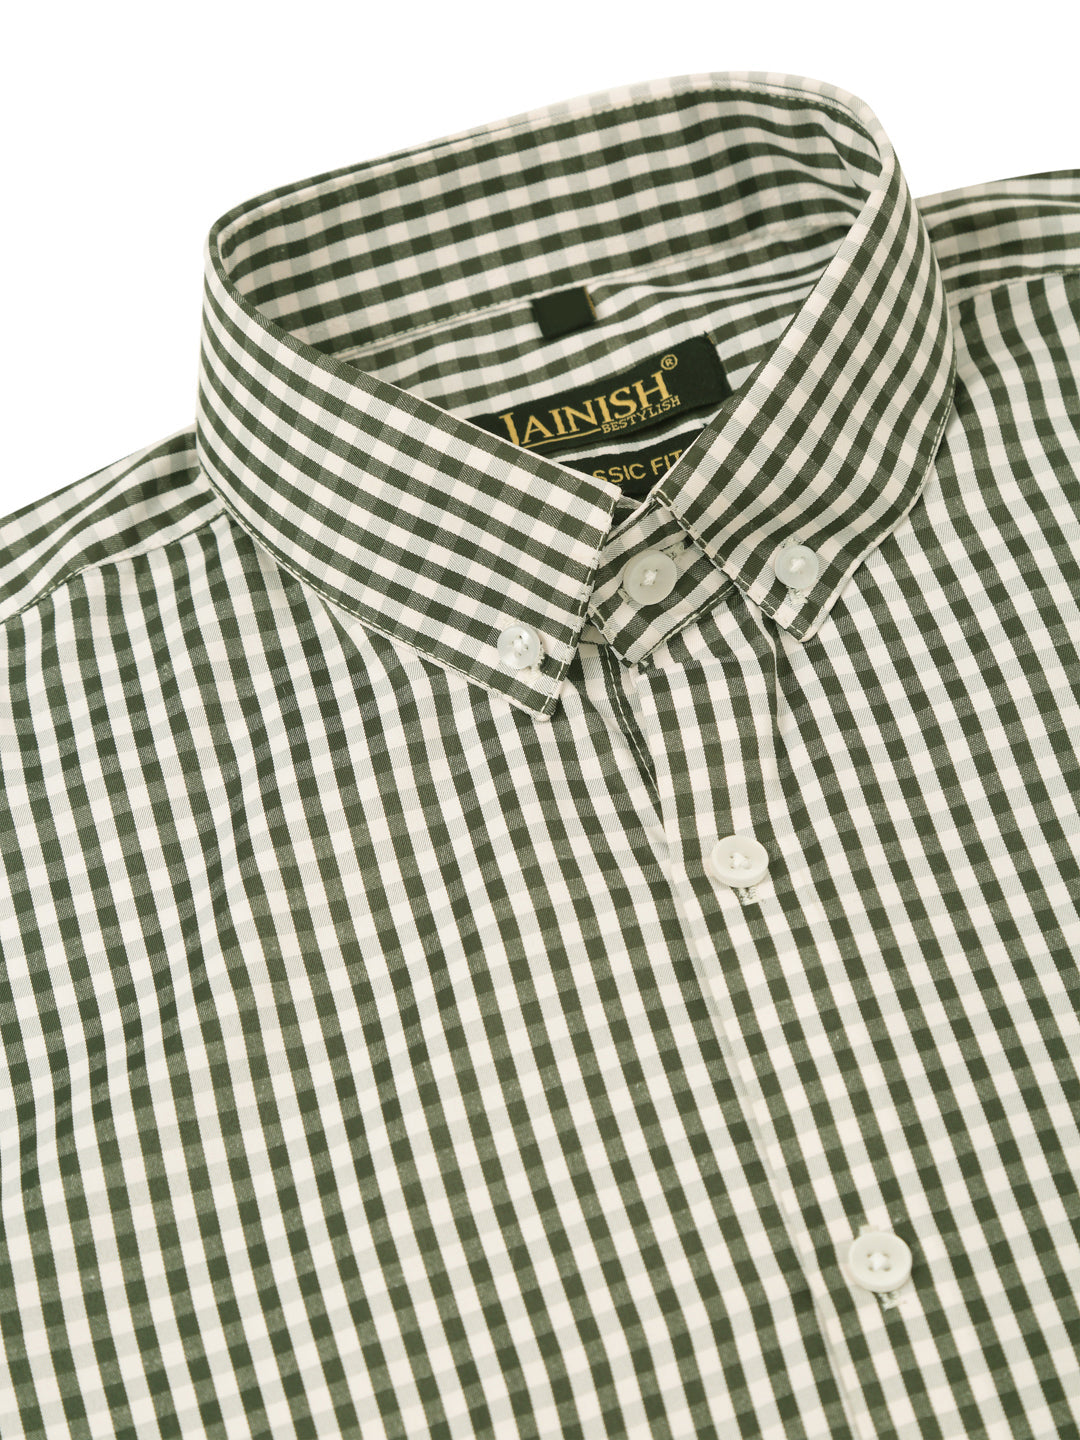 Men's Cotton Checked Button Down Collar Formal Shirts ( SF 810Black ) - Jainish